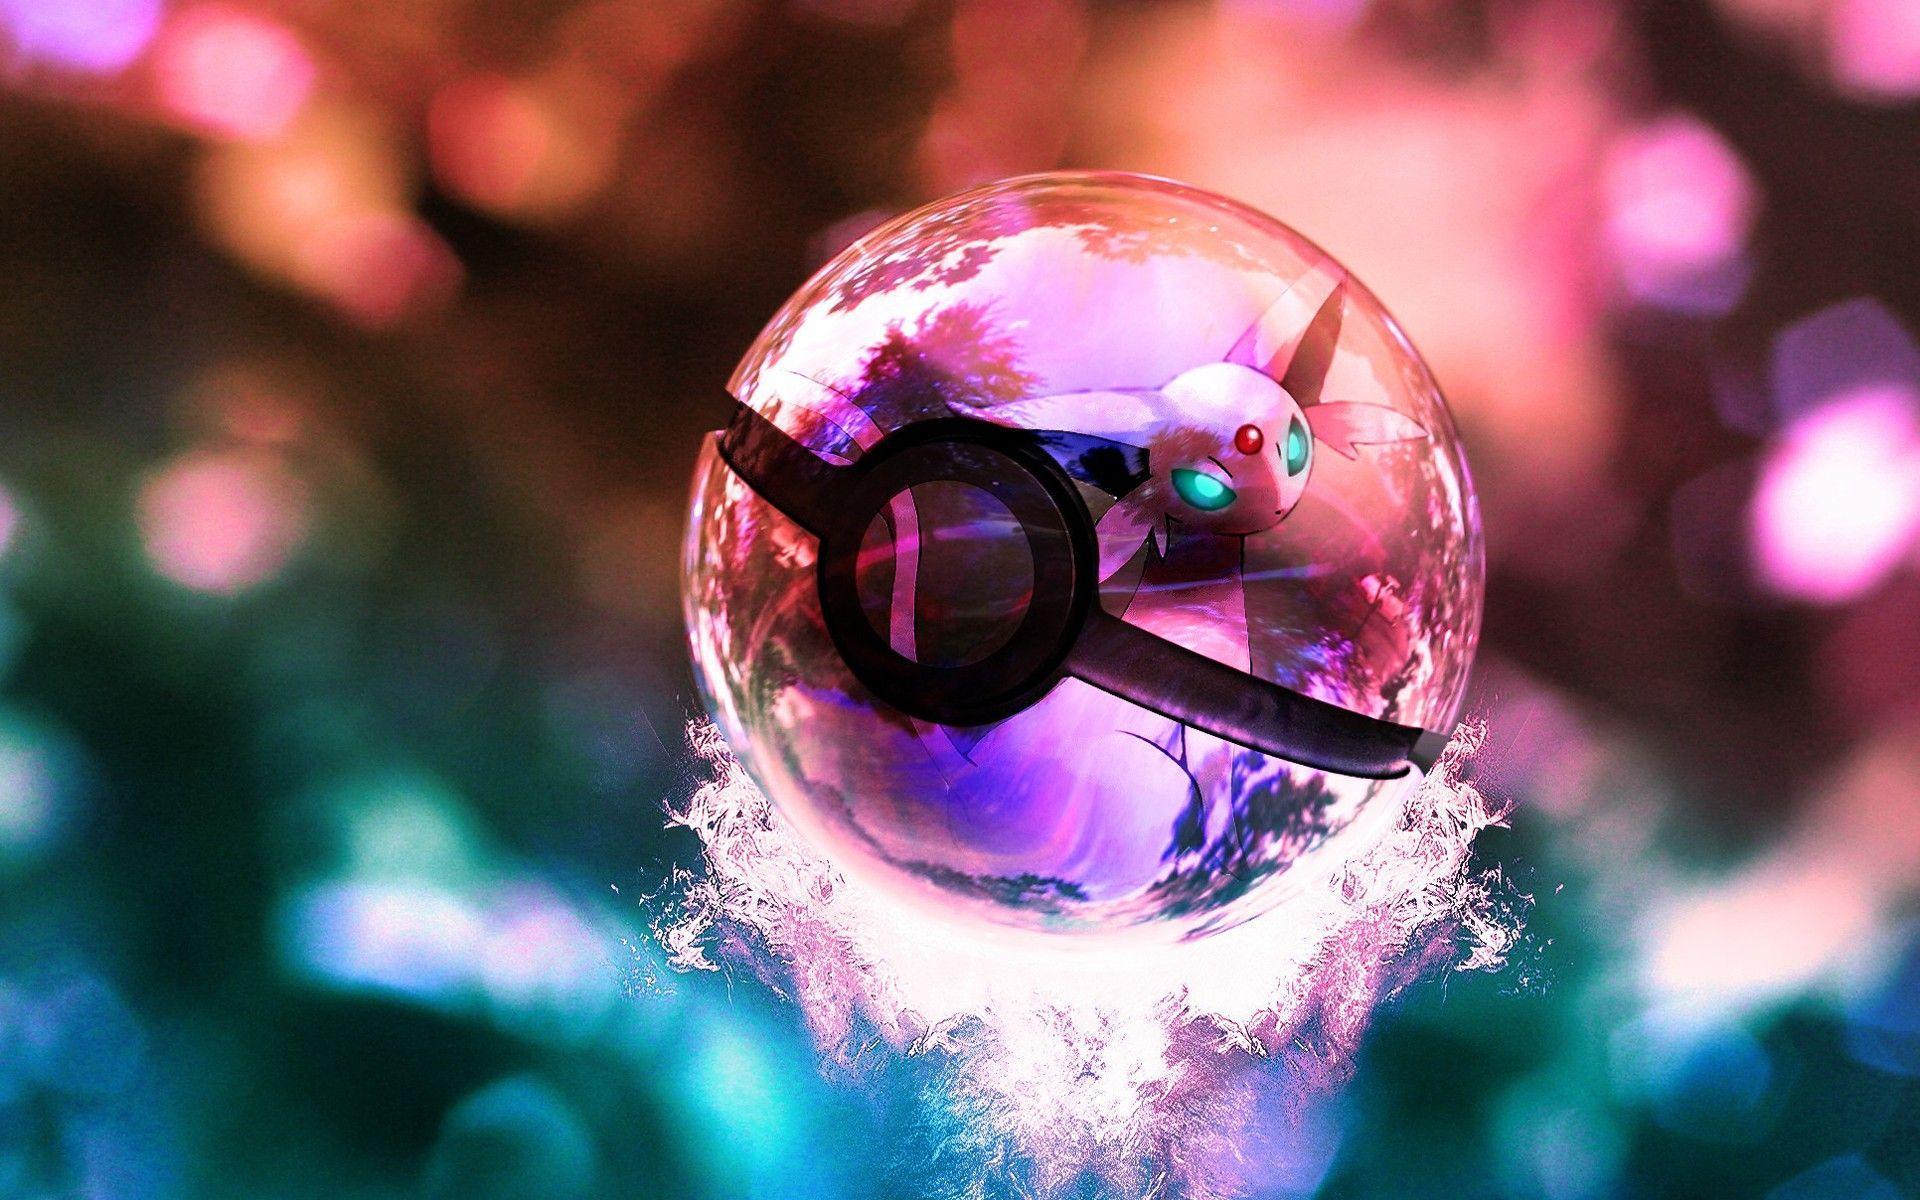 Pokemon 3D Wallpaper. Pokemon poke balls 3D wallpaper background